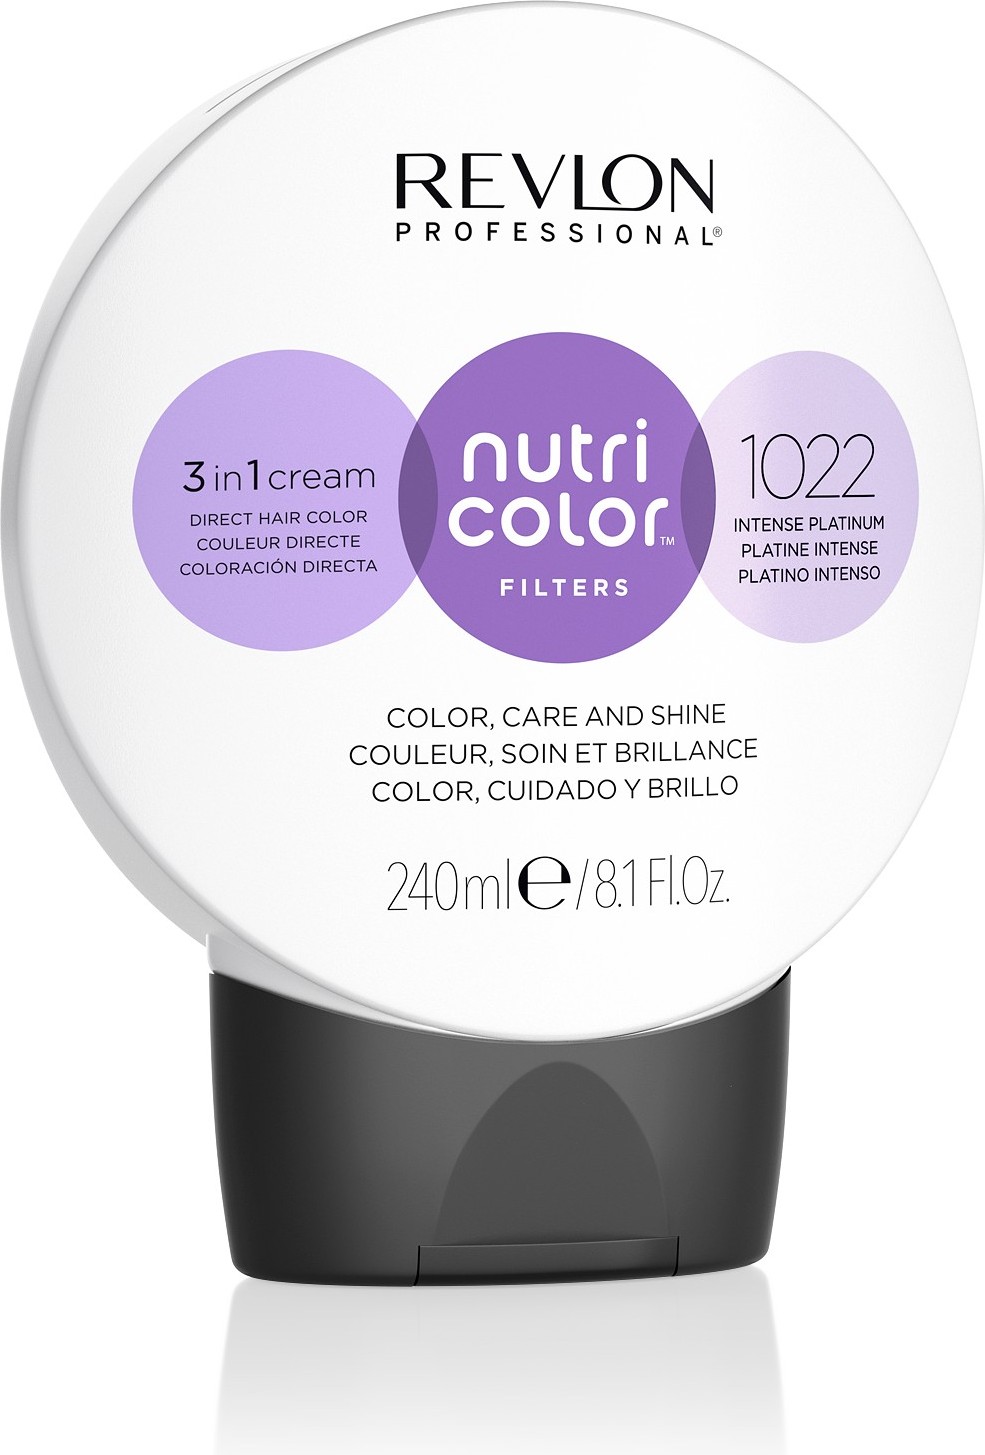  Revlon Professional Nutri Color Filters 1022 Intensives Platin 240 ml 